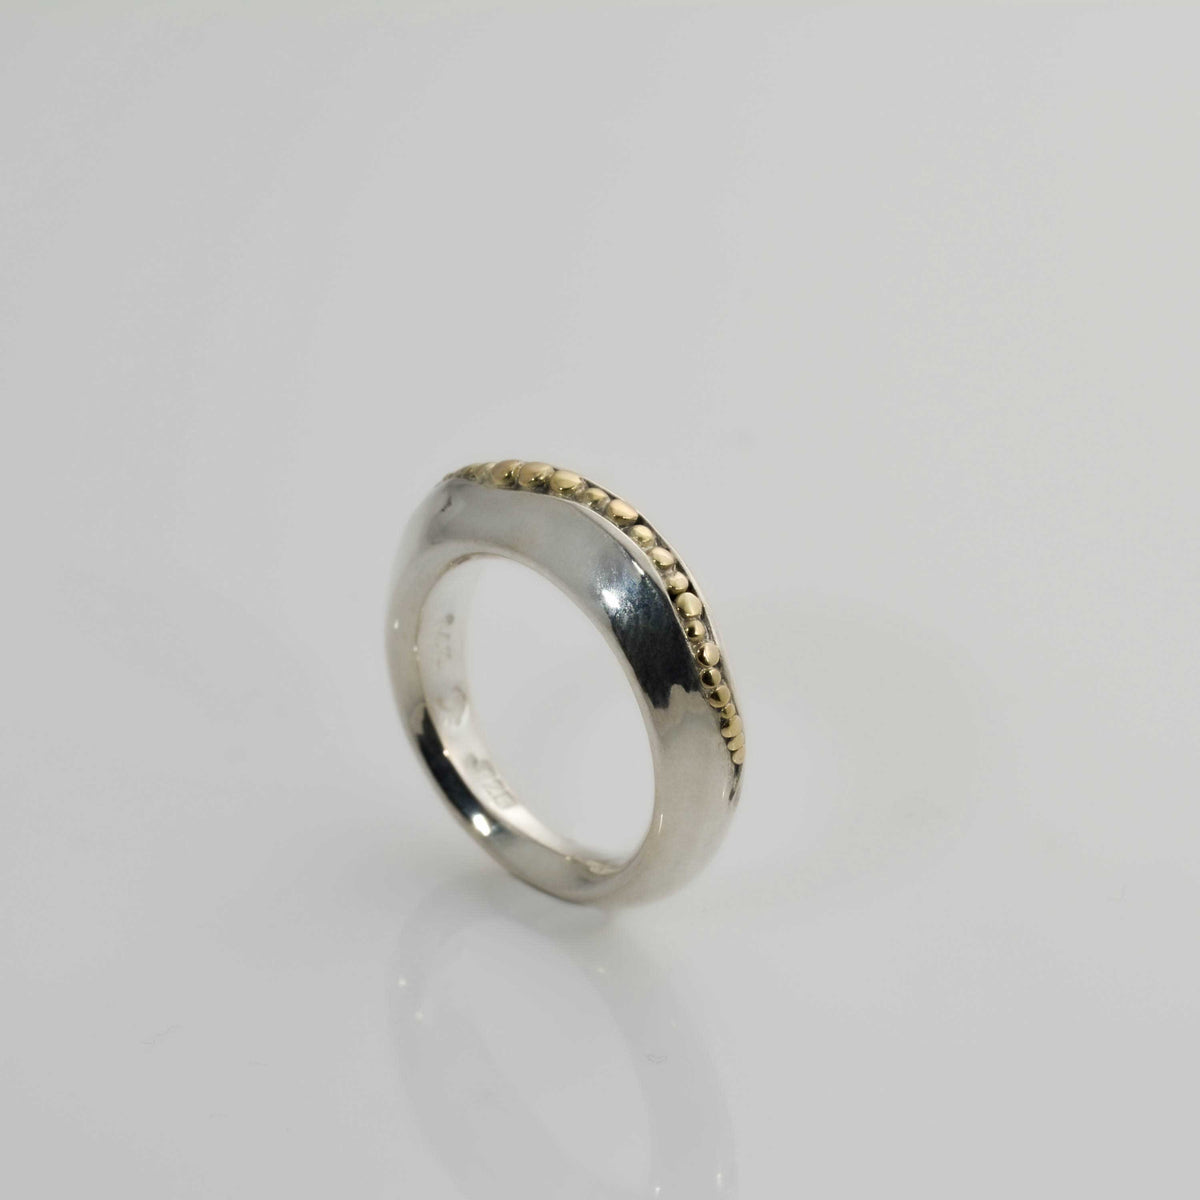 Goldener Pfadring, ein eleganter, einzigartiger Ring mit 14K Goldakzent